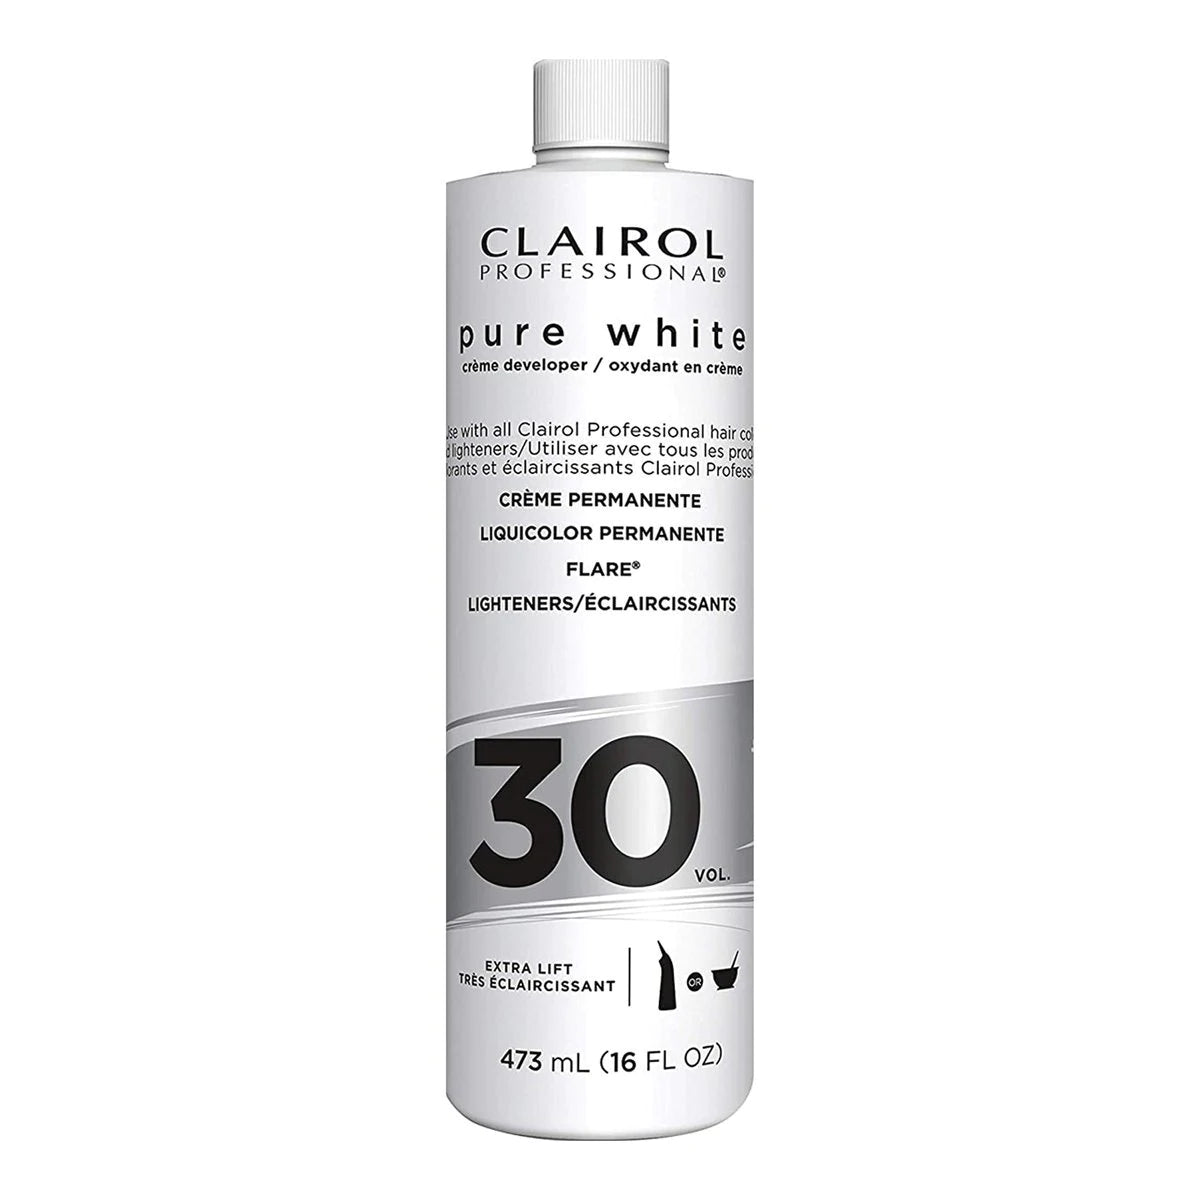 Clairol Professional Pure White Creme Developer 30 Vol 16oz - Sfbeautybar